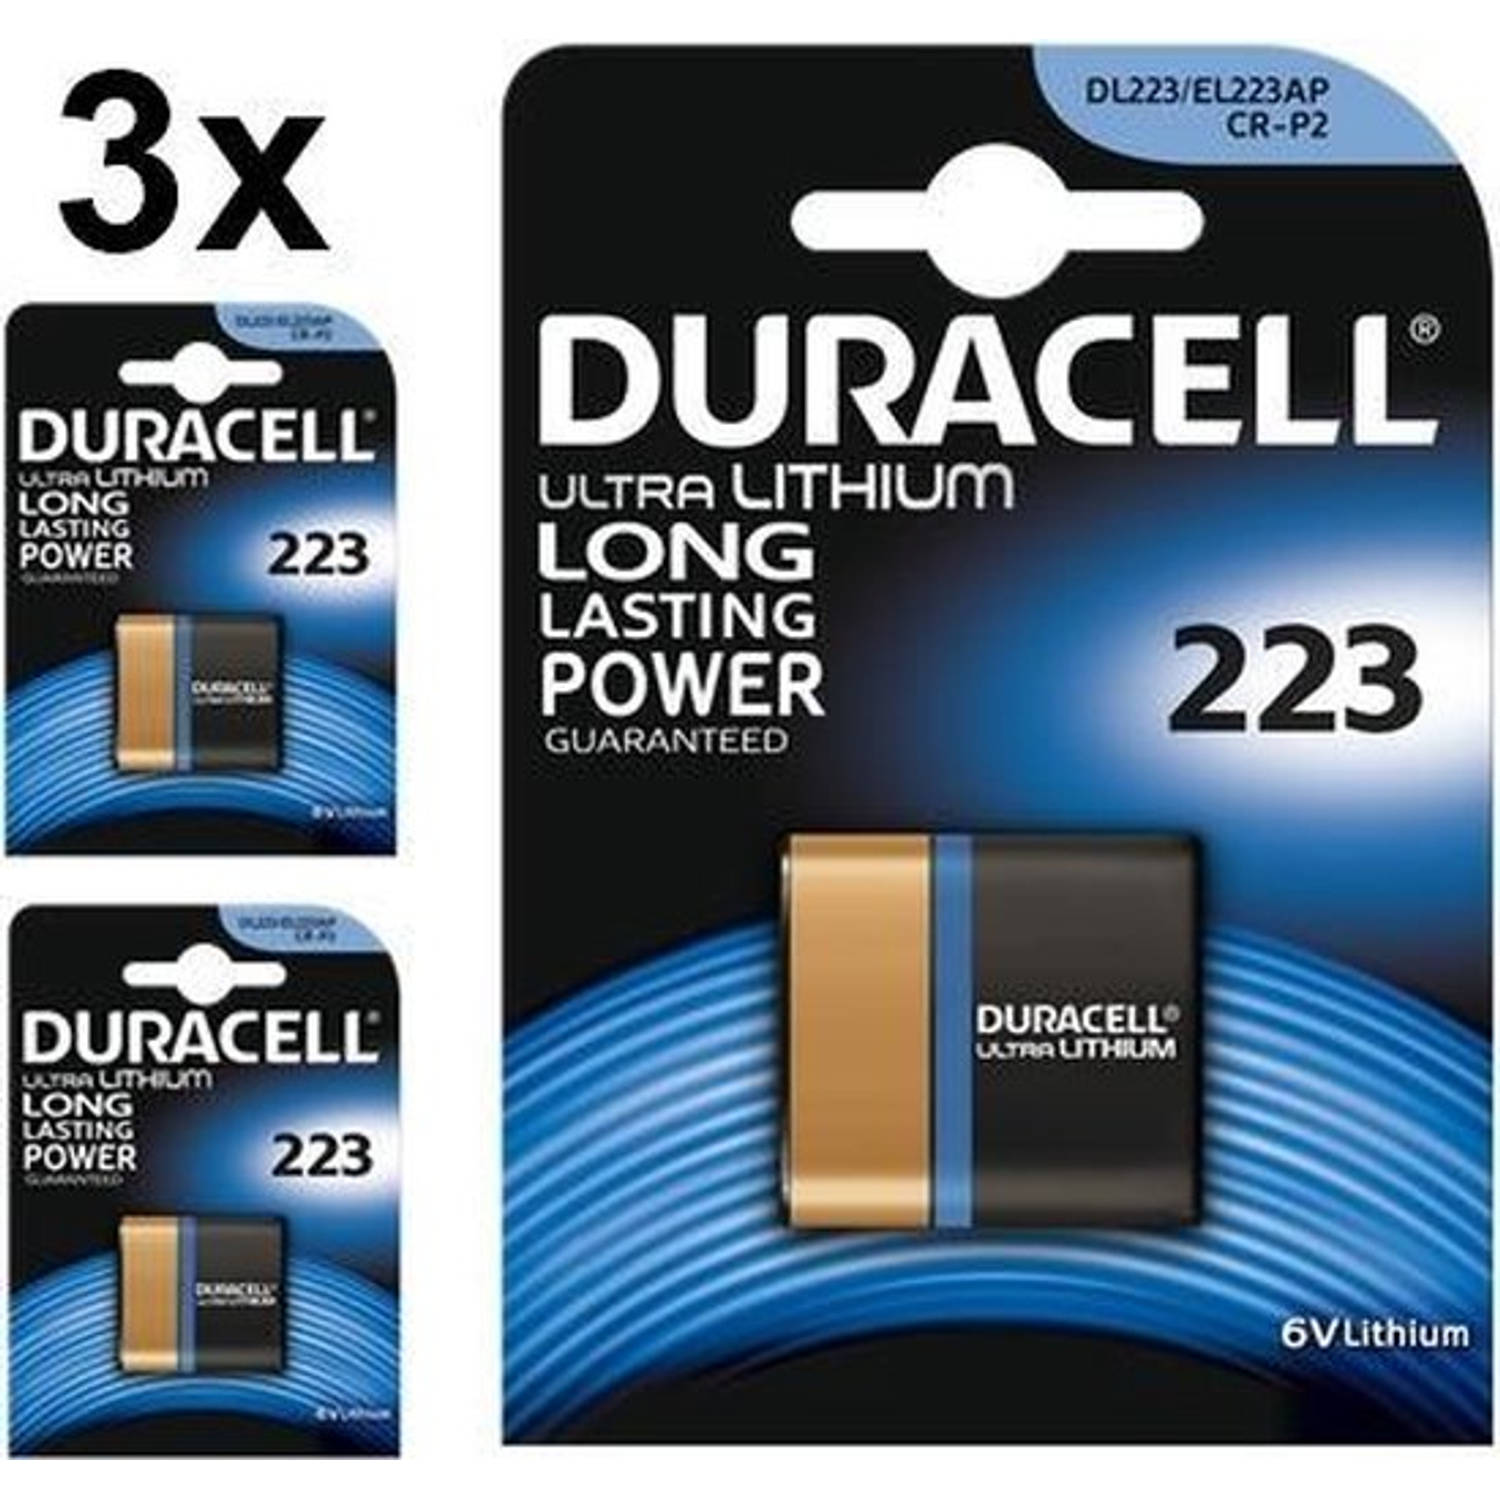 3 Stuks Duracell Crp2-223-Dl223-El223ap-Cr-p2 6v Lithium Batterij